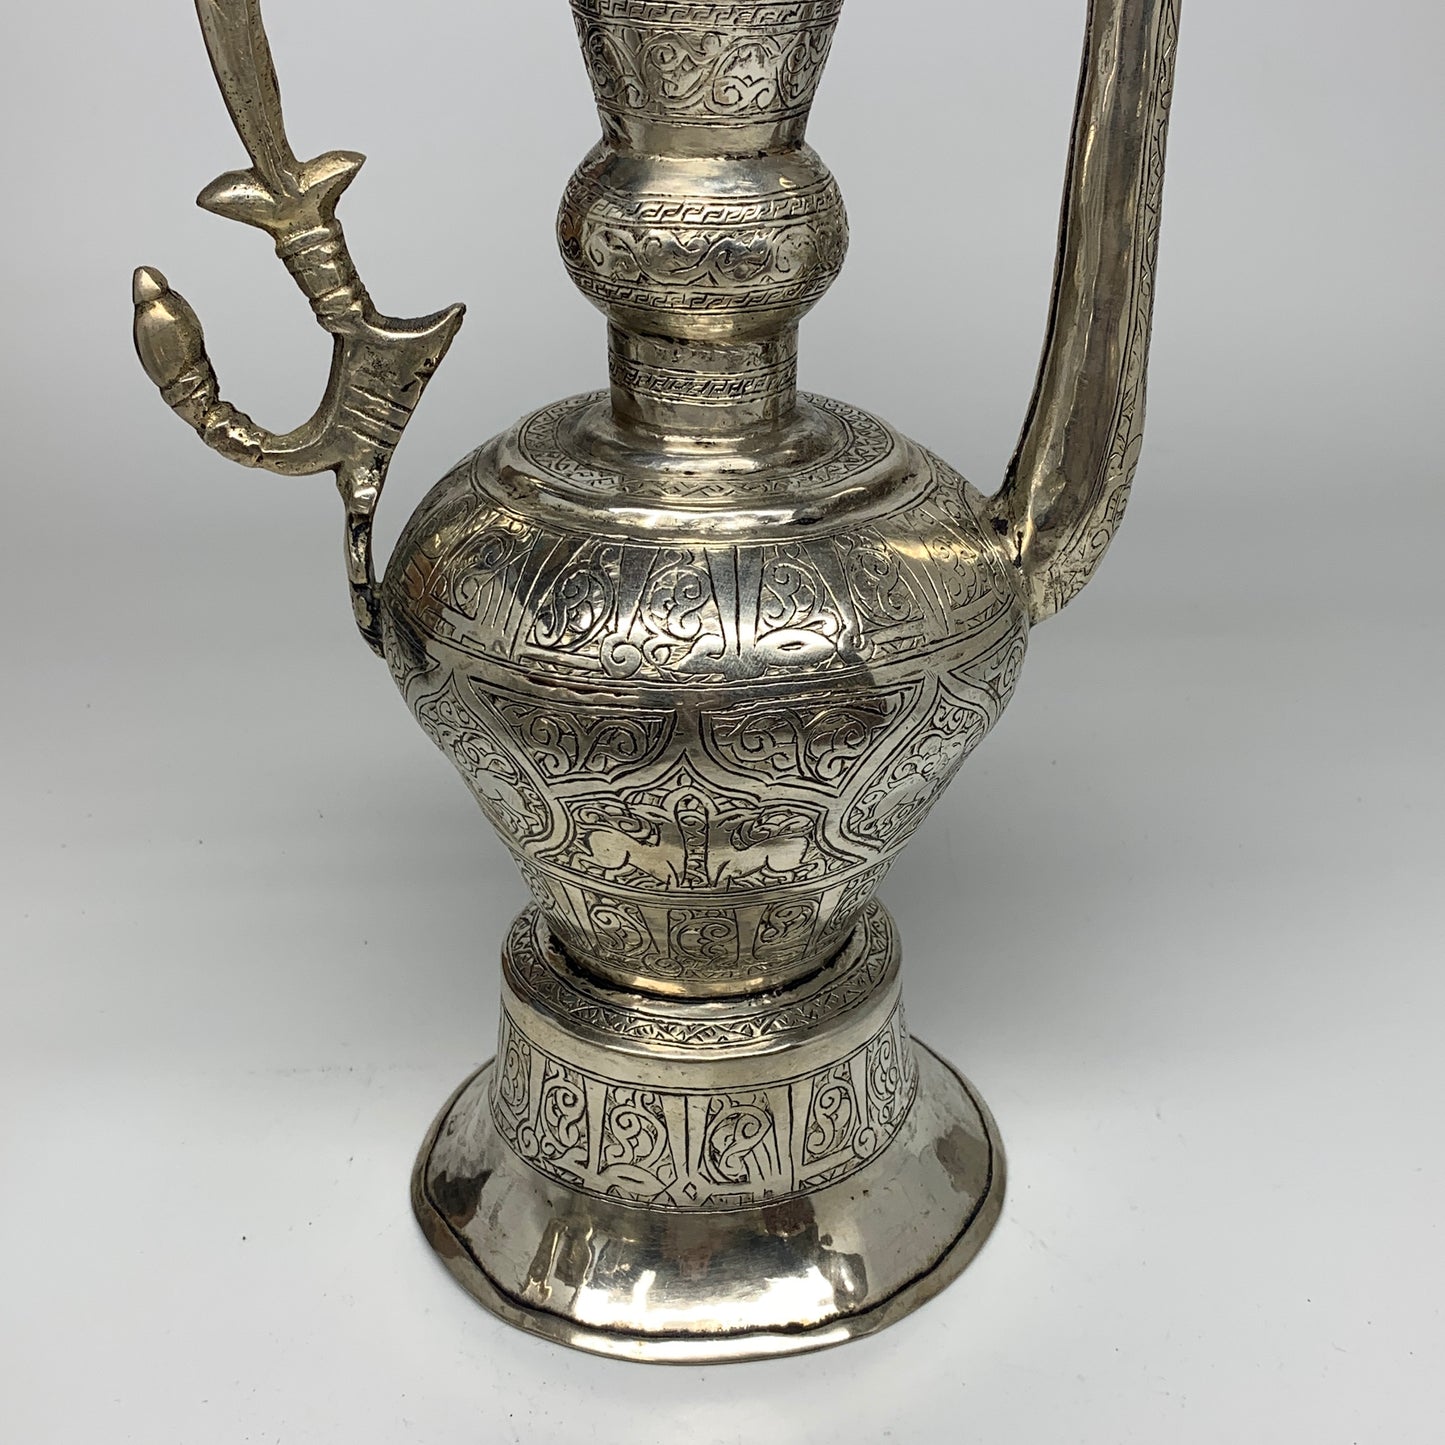 1096g,14.5"x6.5" Handmade Antique Pitcher Ewer Brass/Copper @Afghanistan, P152